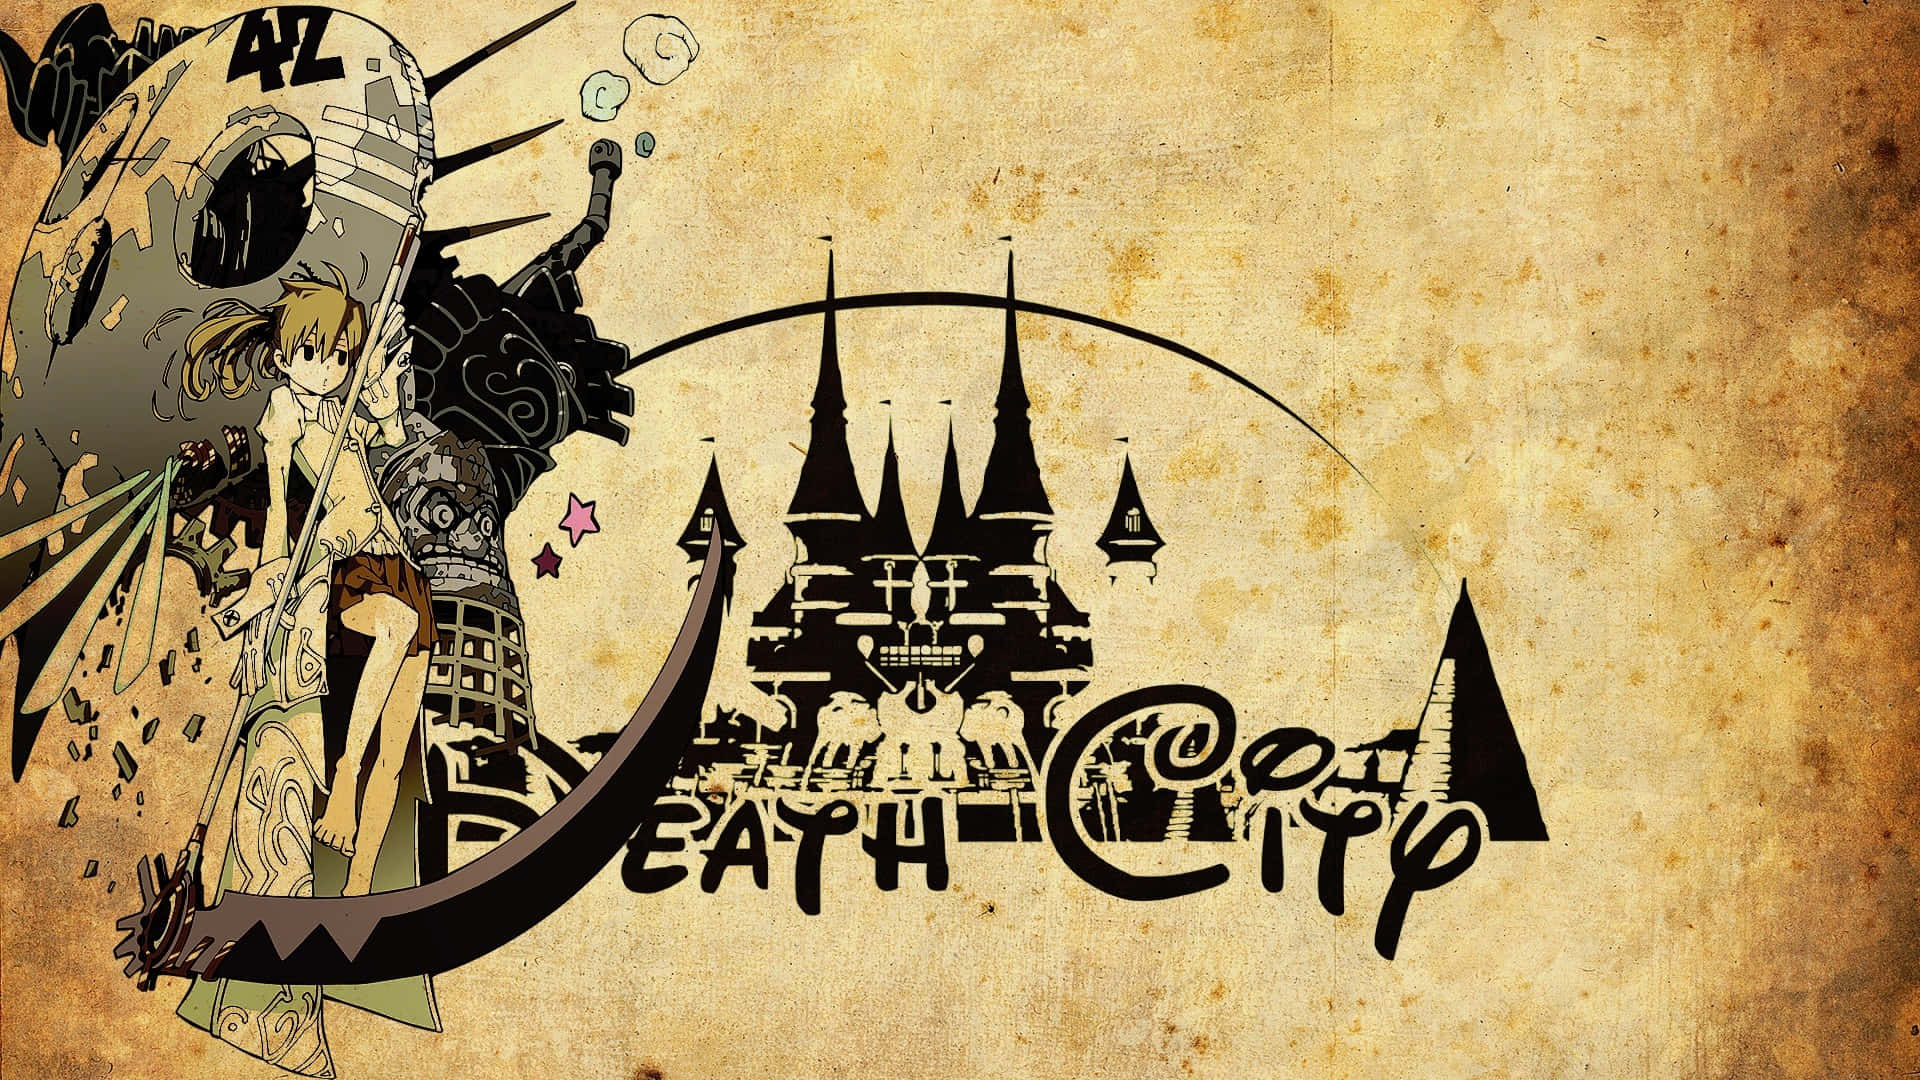 Souleater Death City Bakgrund.